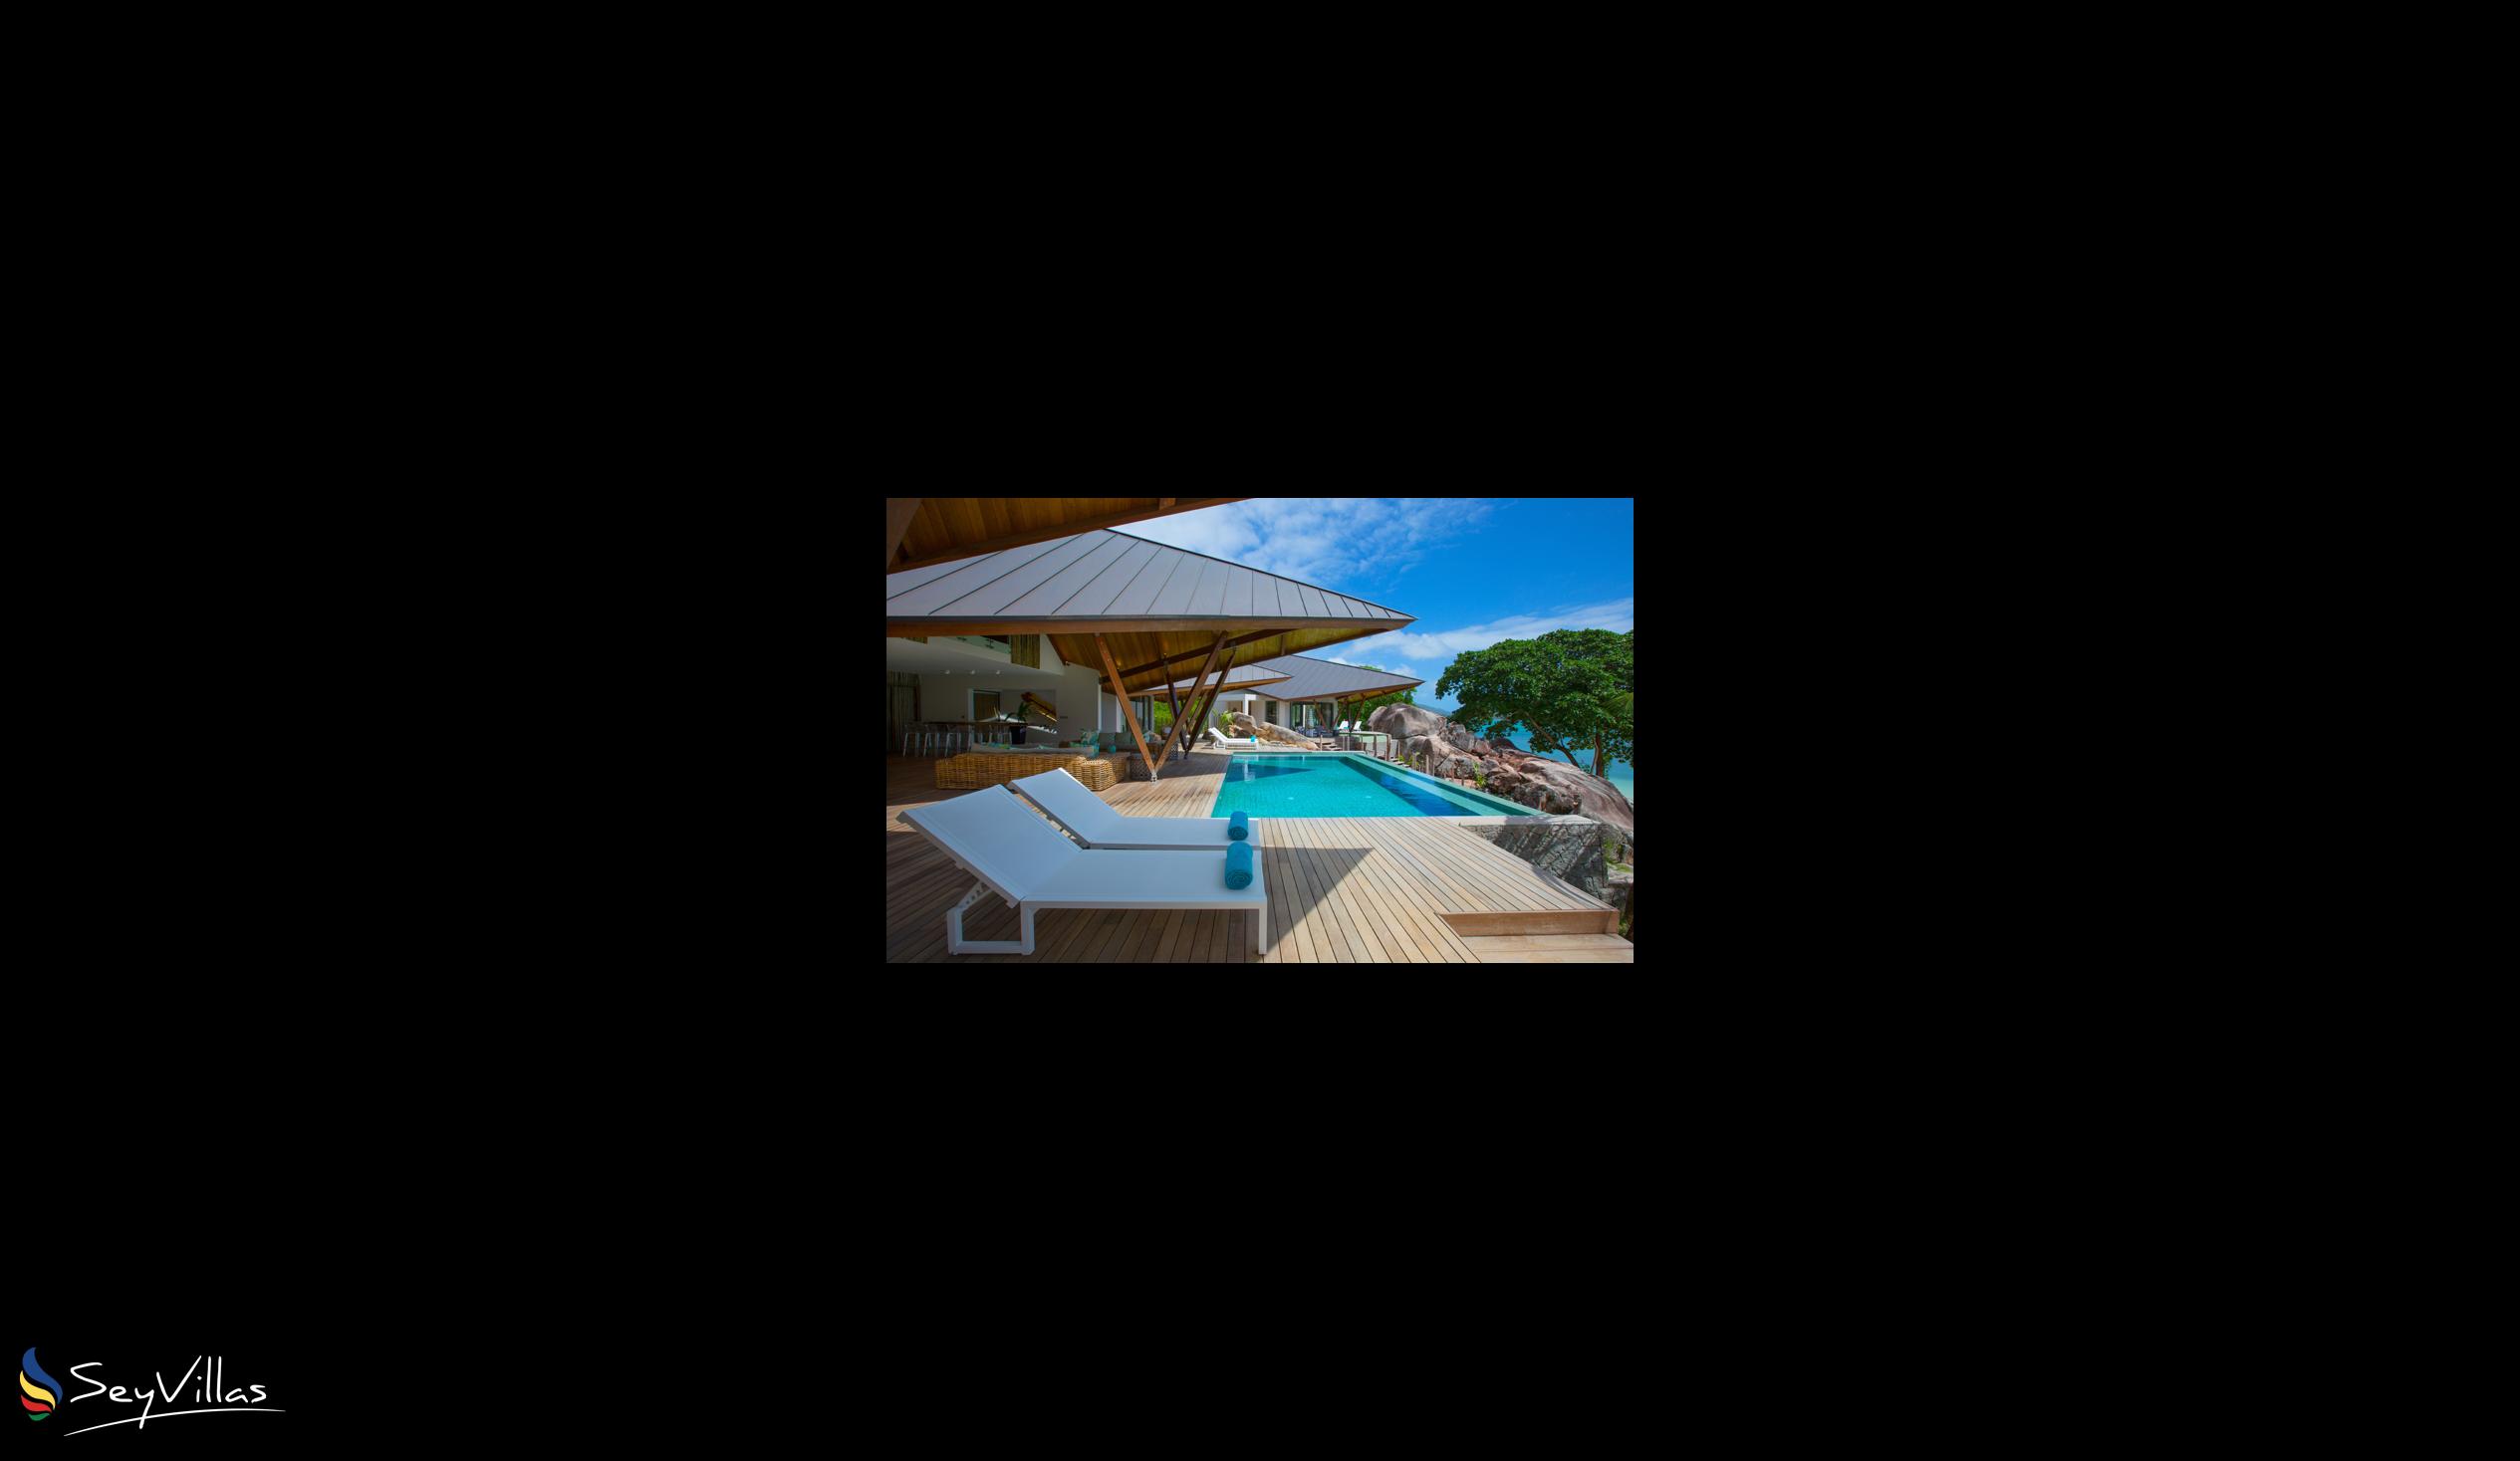 Photo 5: Villa Deckenia - Outdoor area - Praslin (Seychelles)